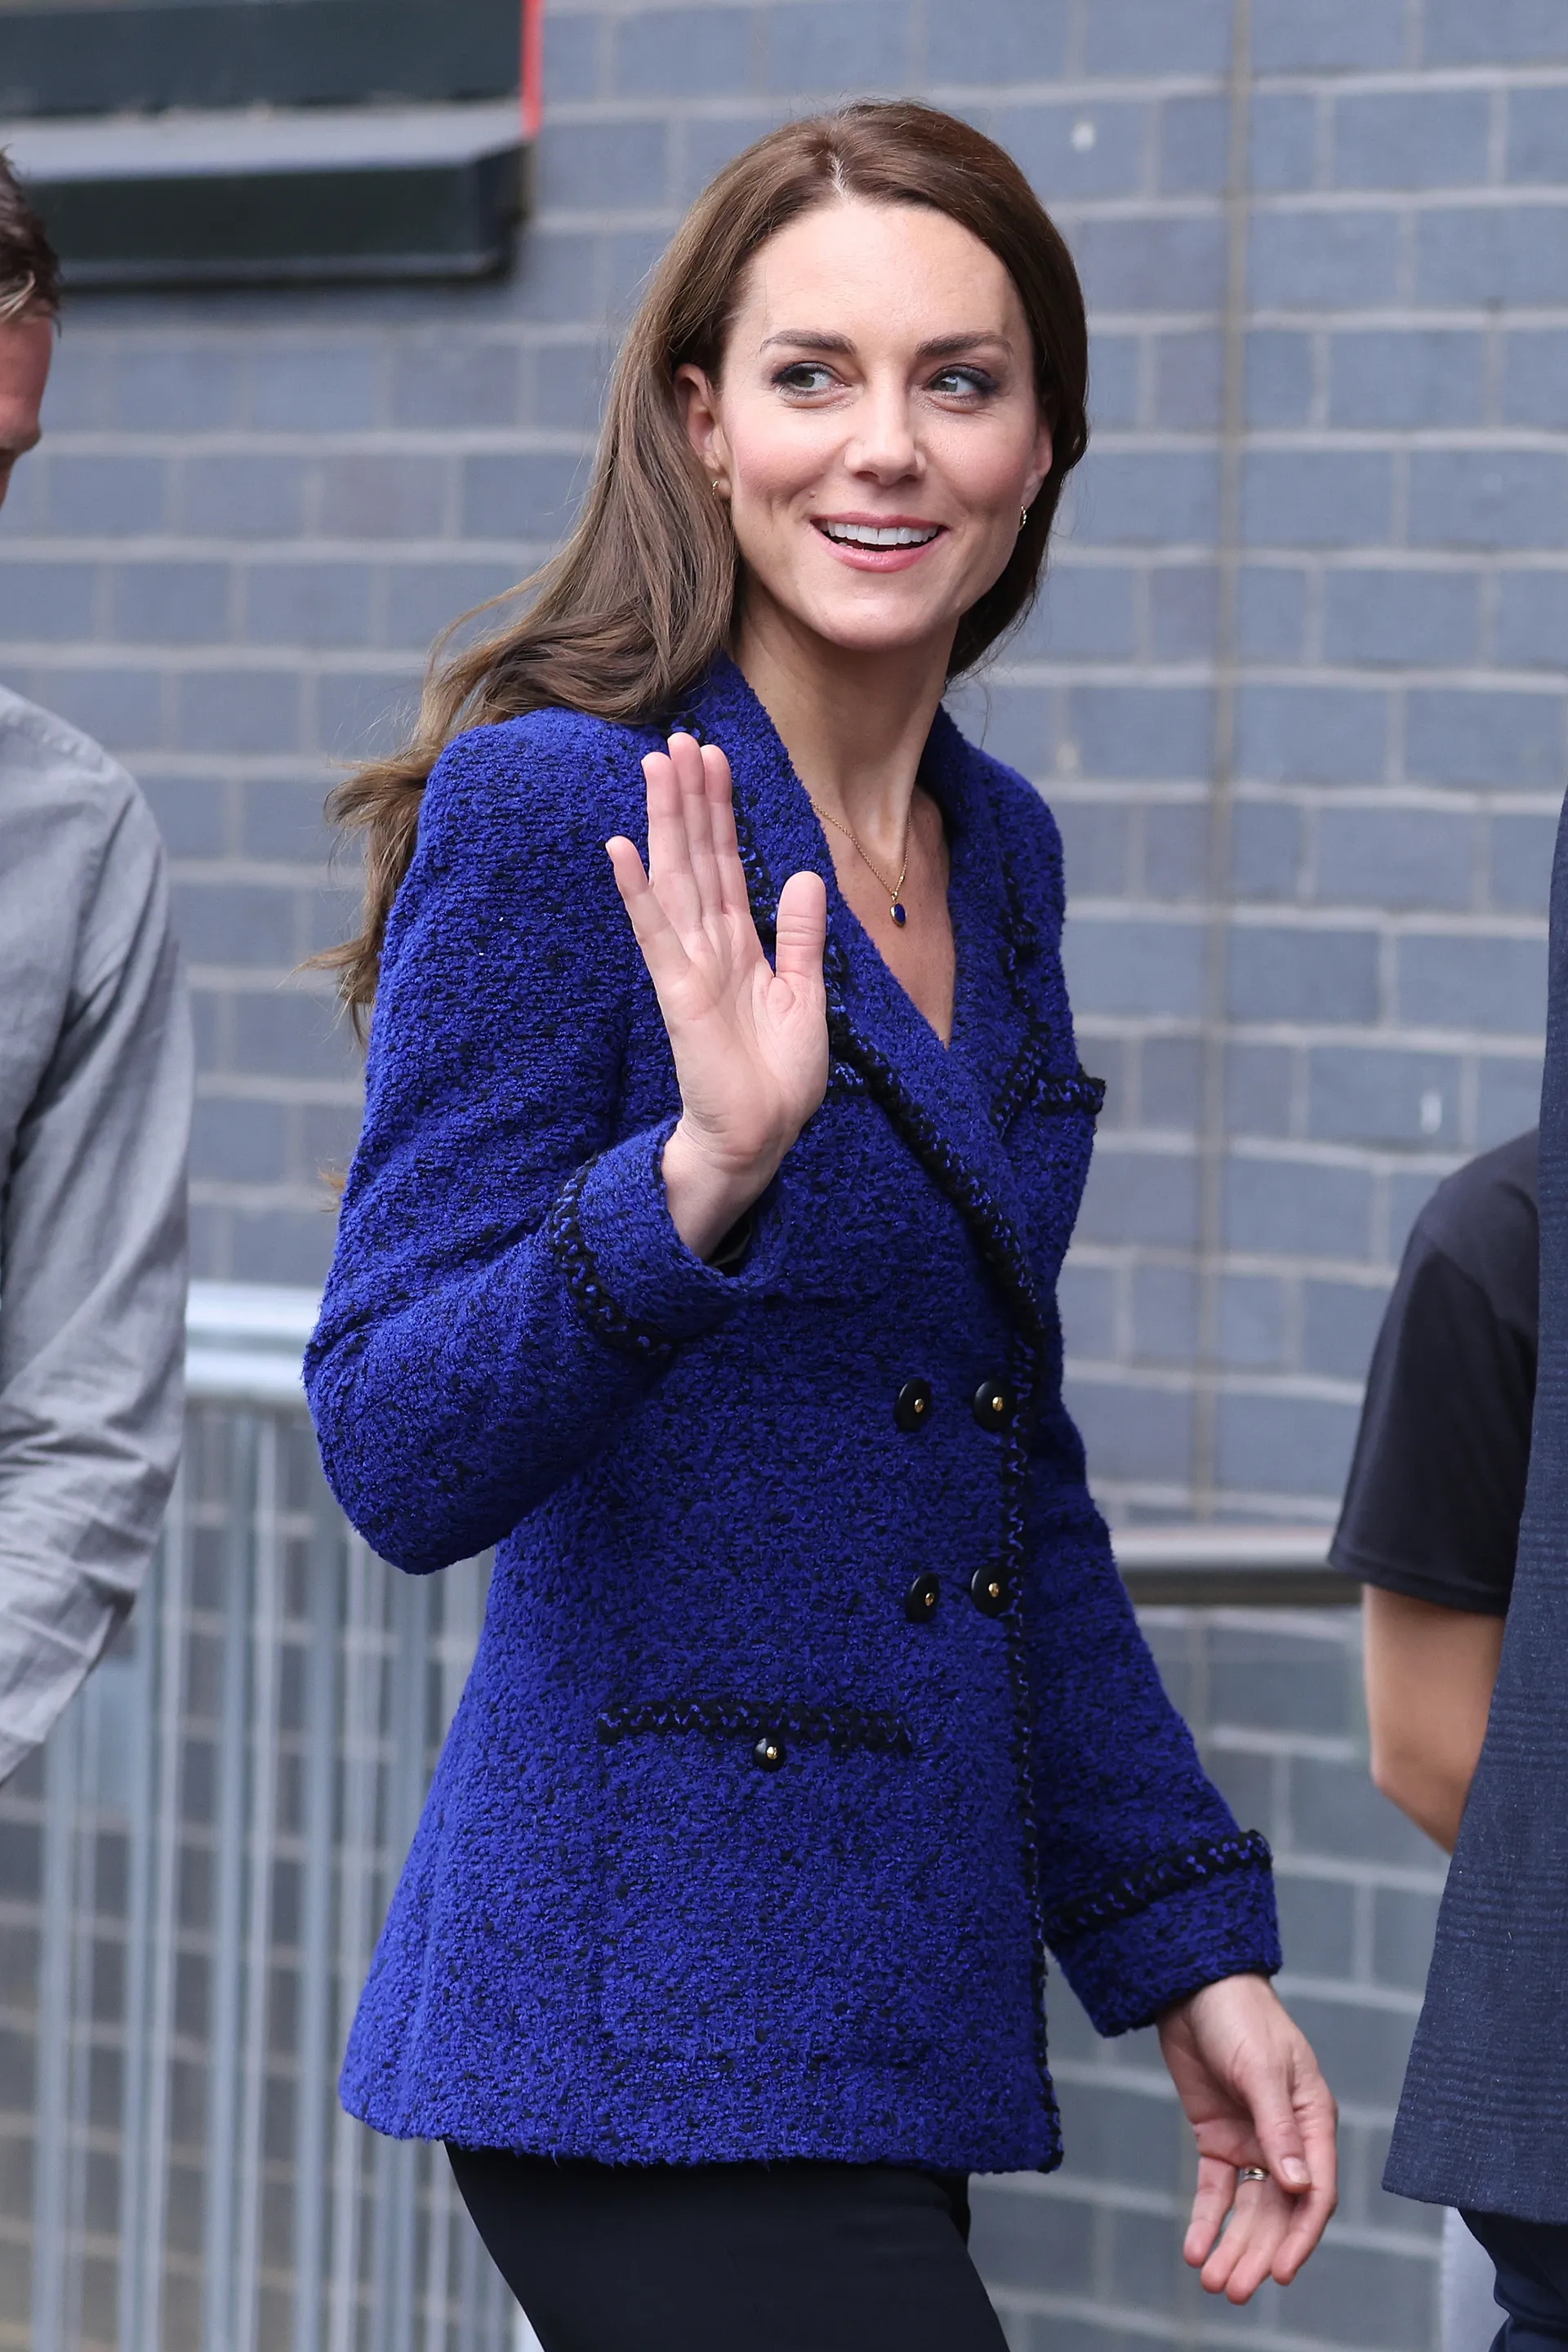 Kate Middleton, Kate Middleton อายุ, Kate Middleton ประวัติ, Kate Middleton คือใคร, Kate Middleton แต่งงาน, เจ้าหญิงแห่งเวลส์, Princess of Wales